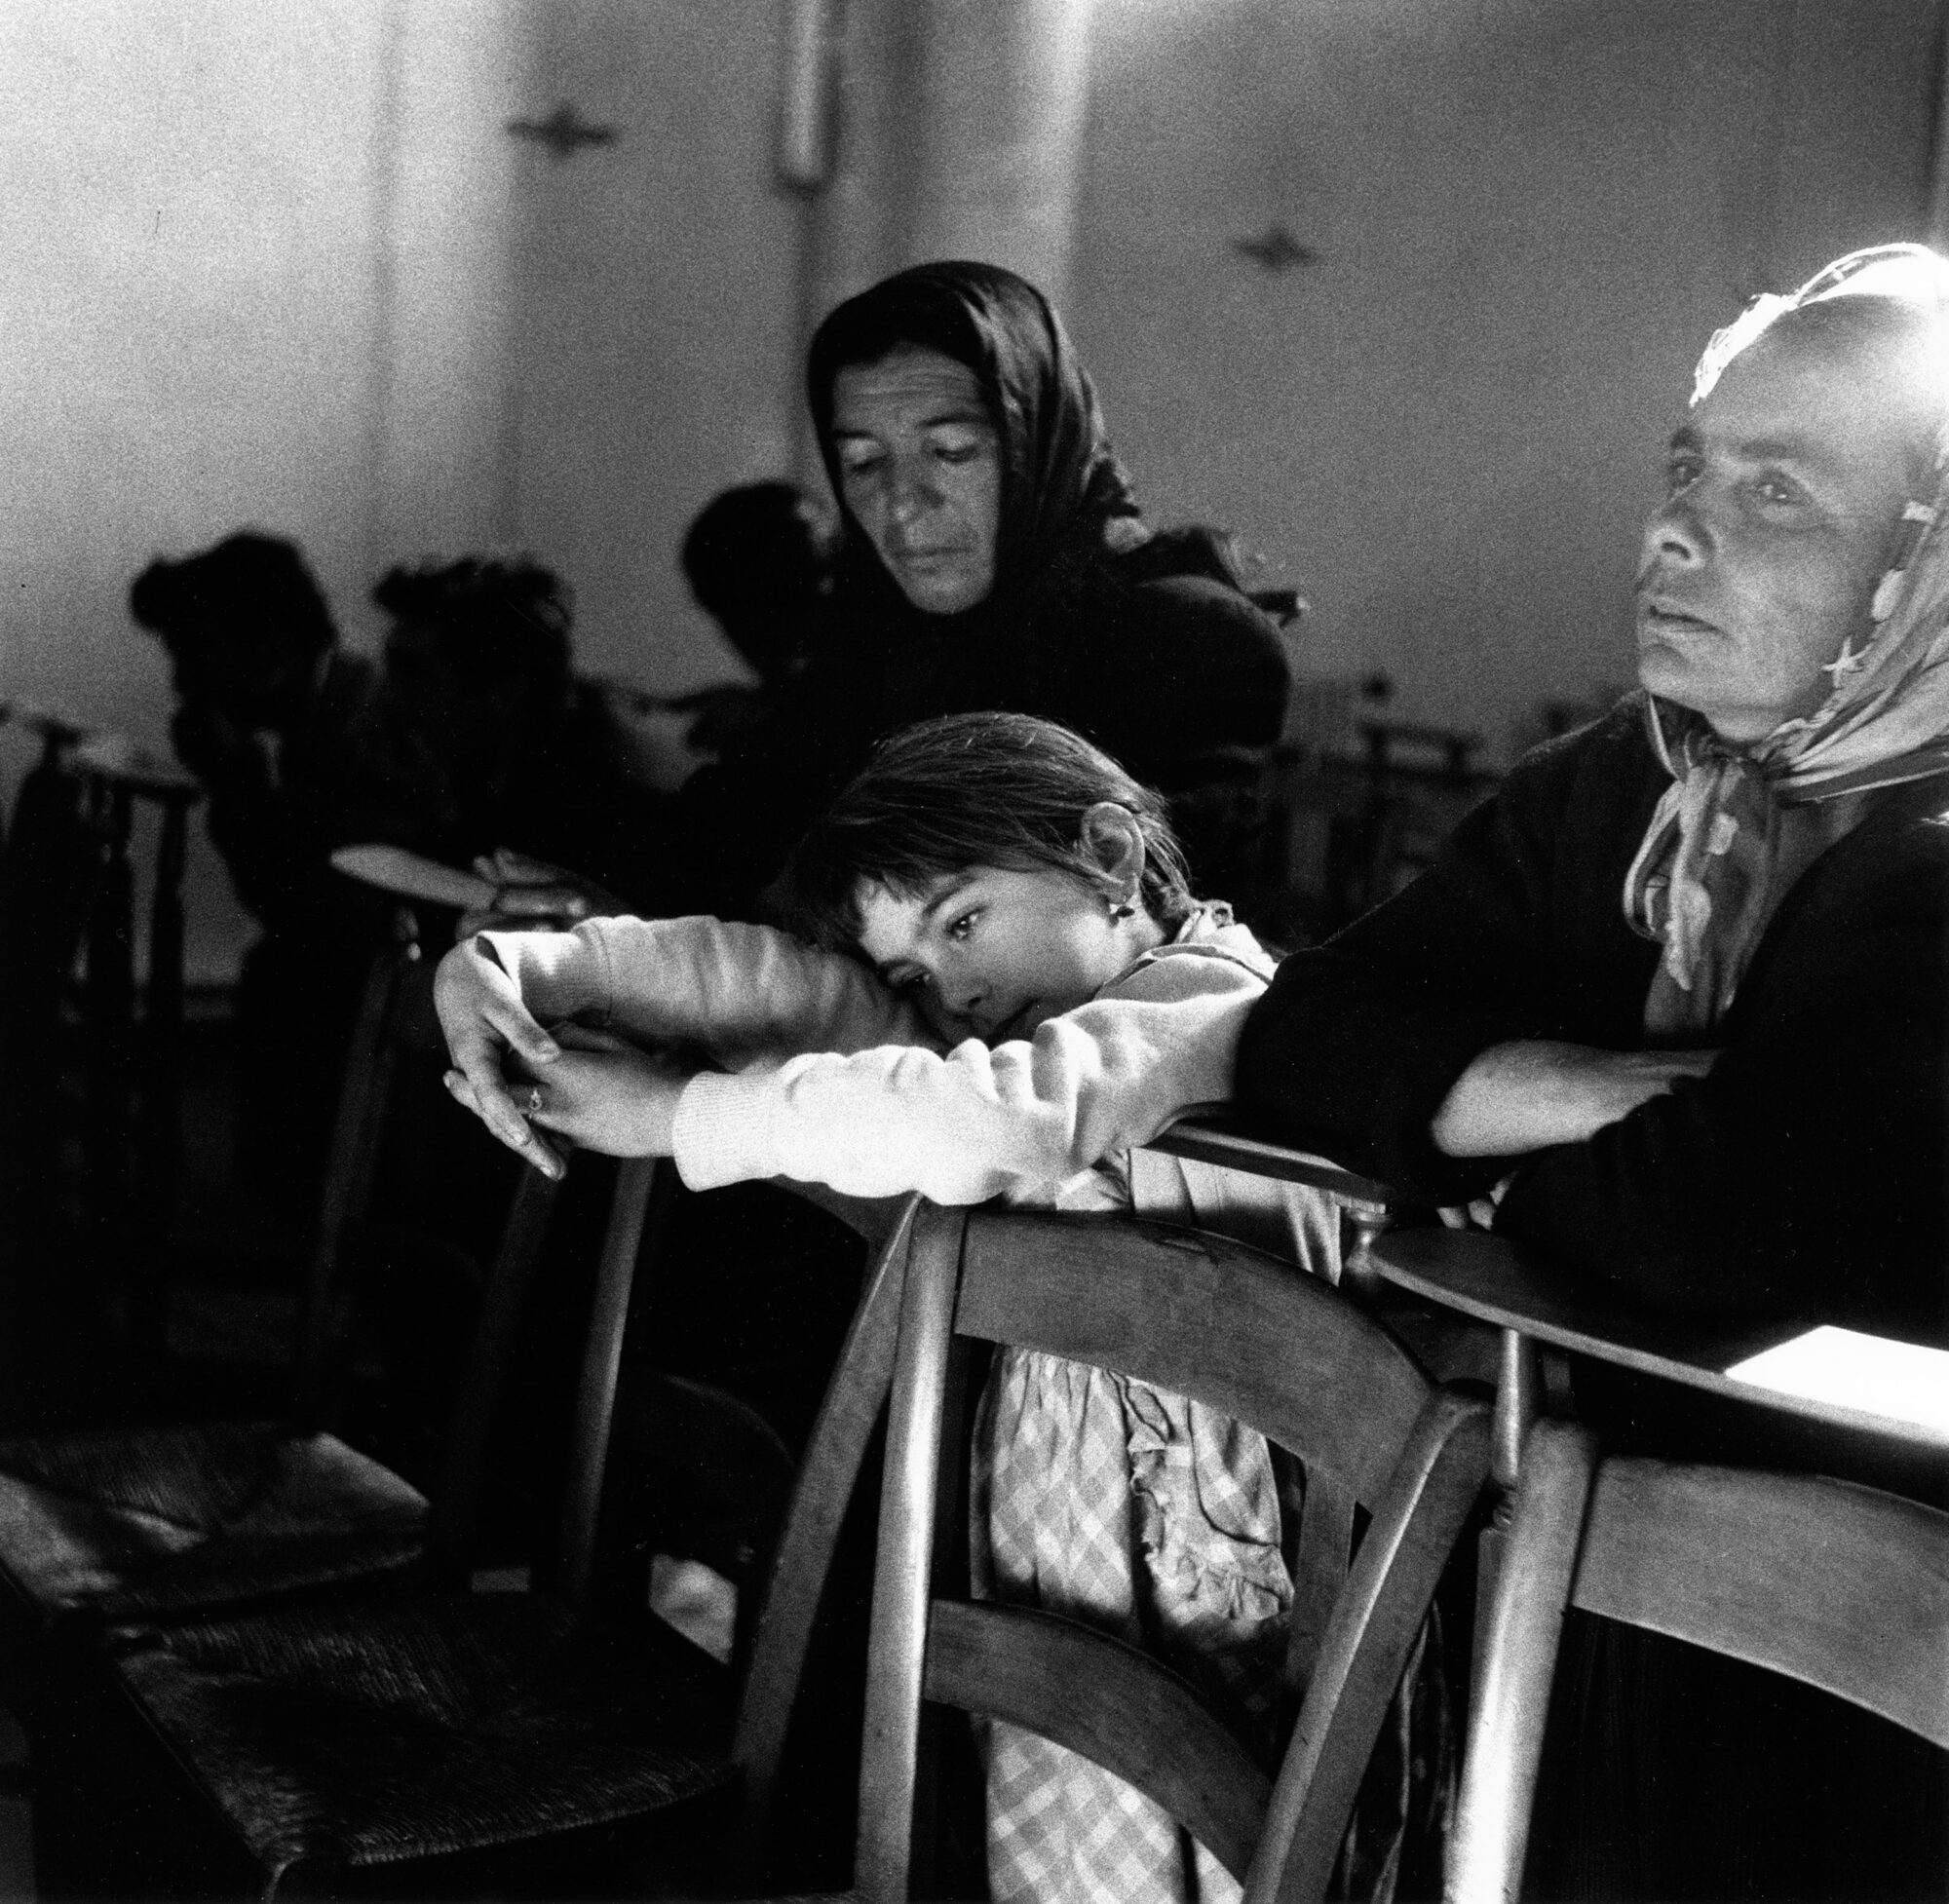 <span class="u-italic400">Little gypsy girl in the Chapel, Cannet</span> 1958
© Atelier Lucien Clergue